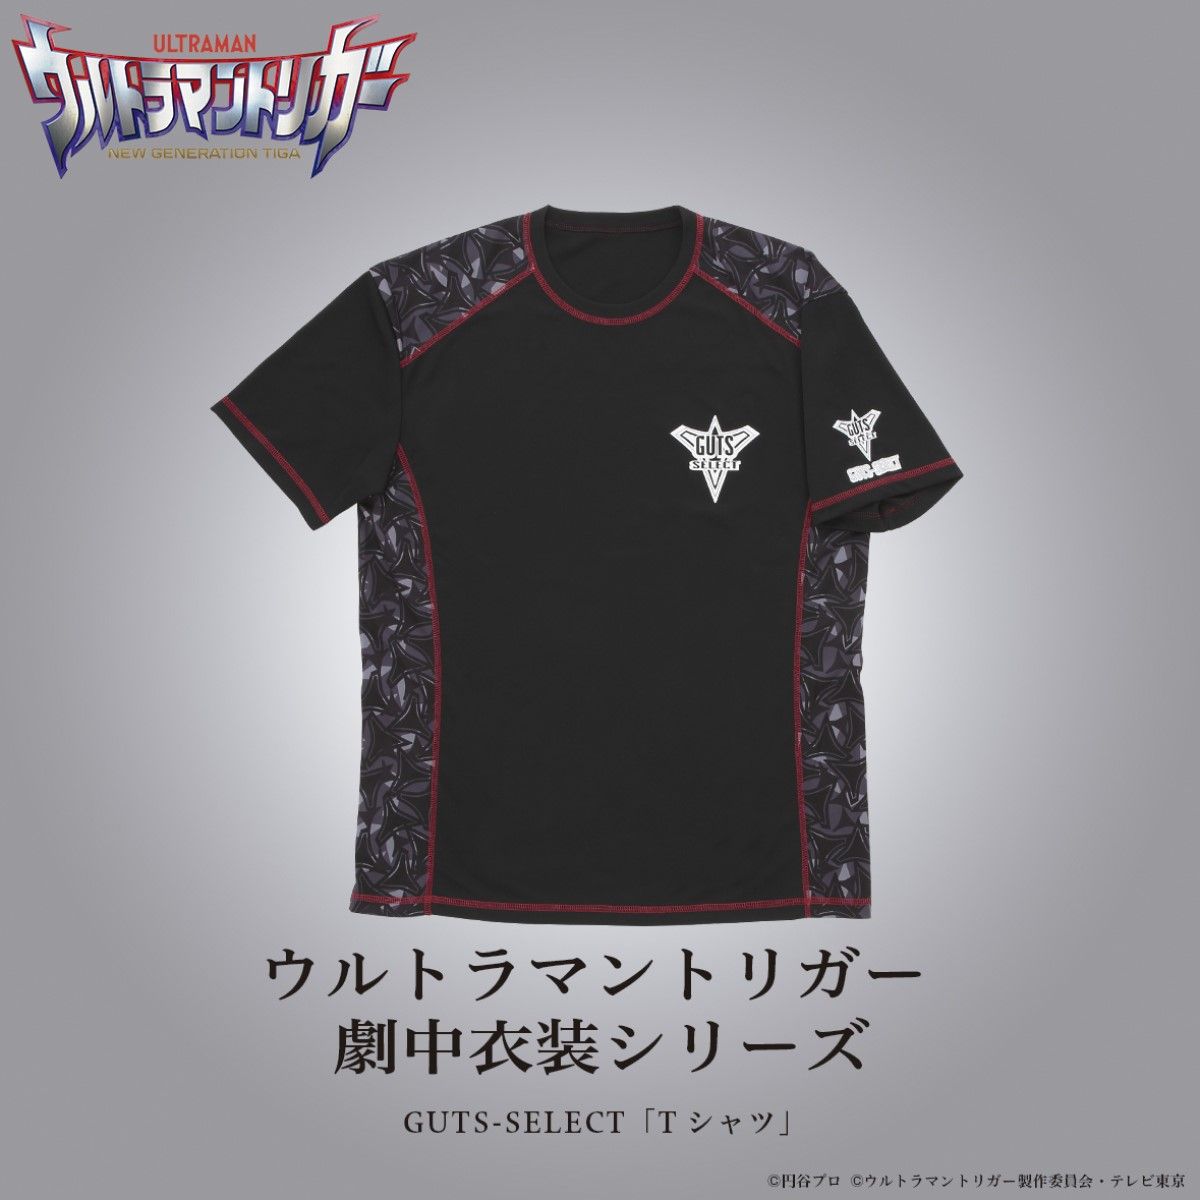 GUTS-Select T-shirt—Ultraman Trigger: New Generation Tiga [Jan 2022 Delivery]